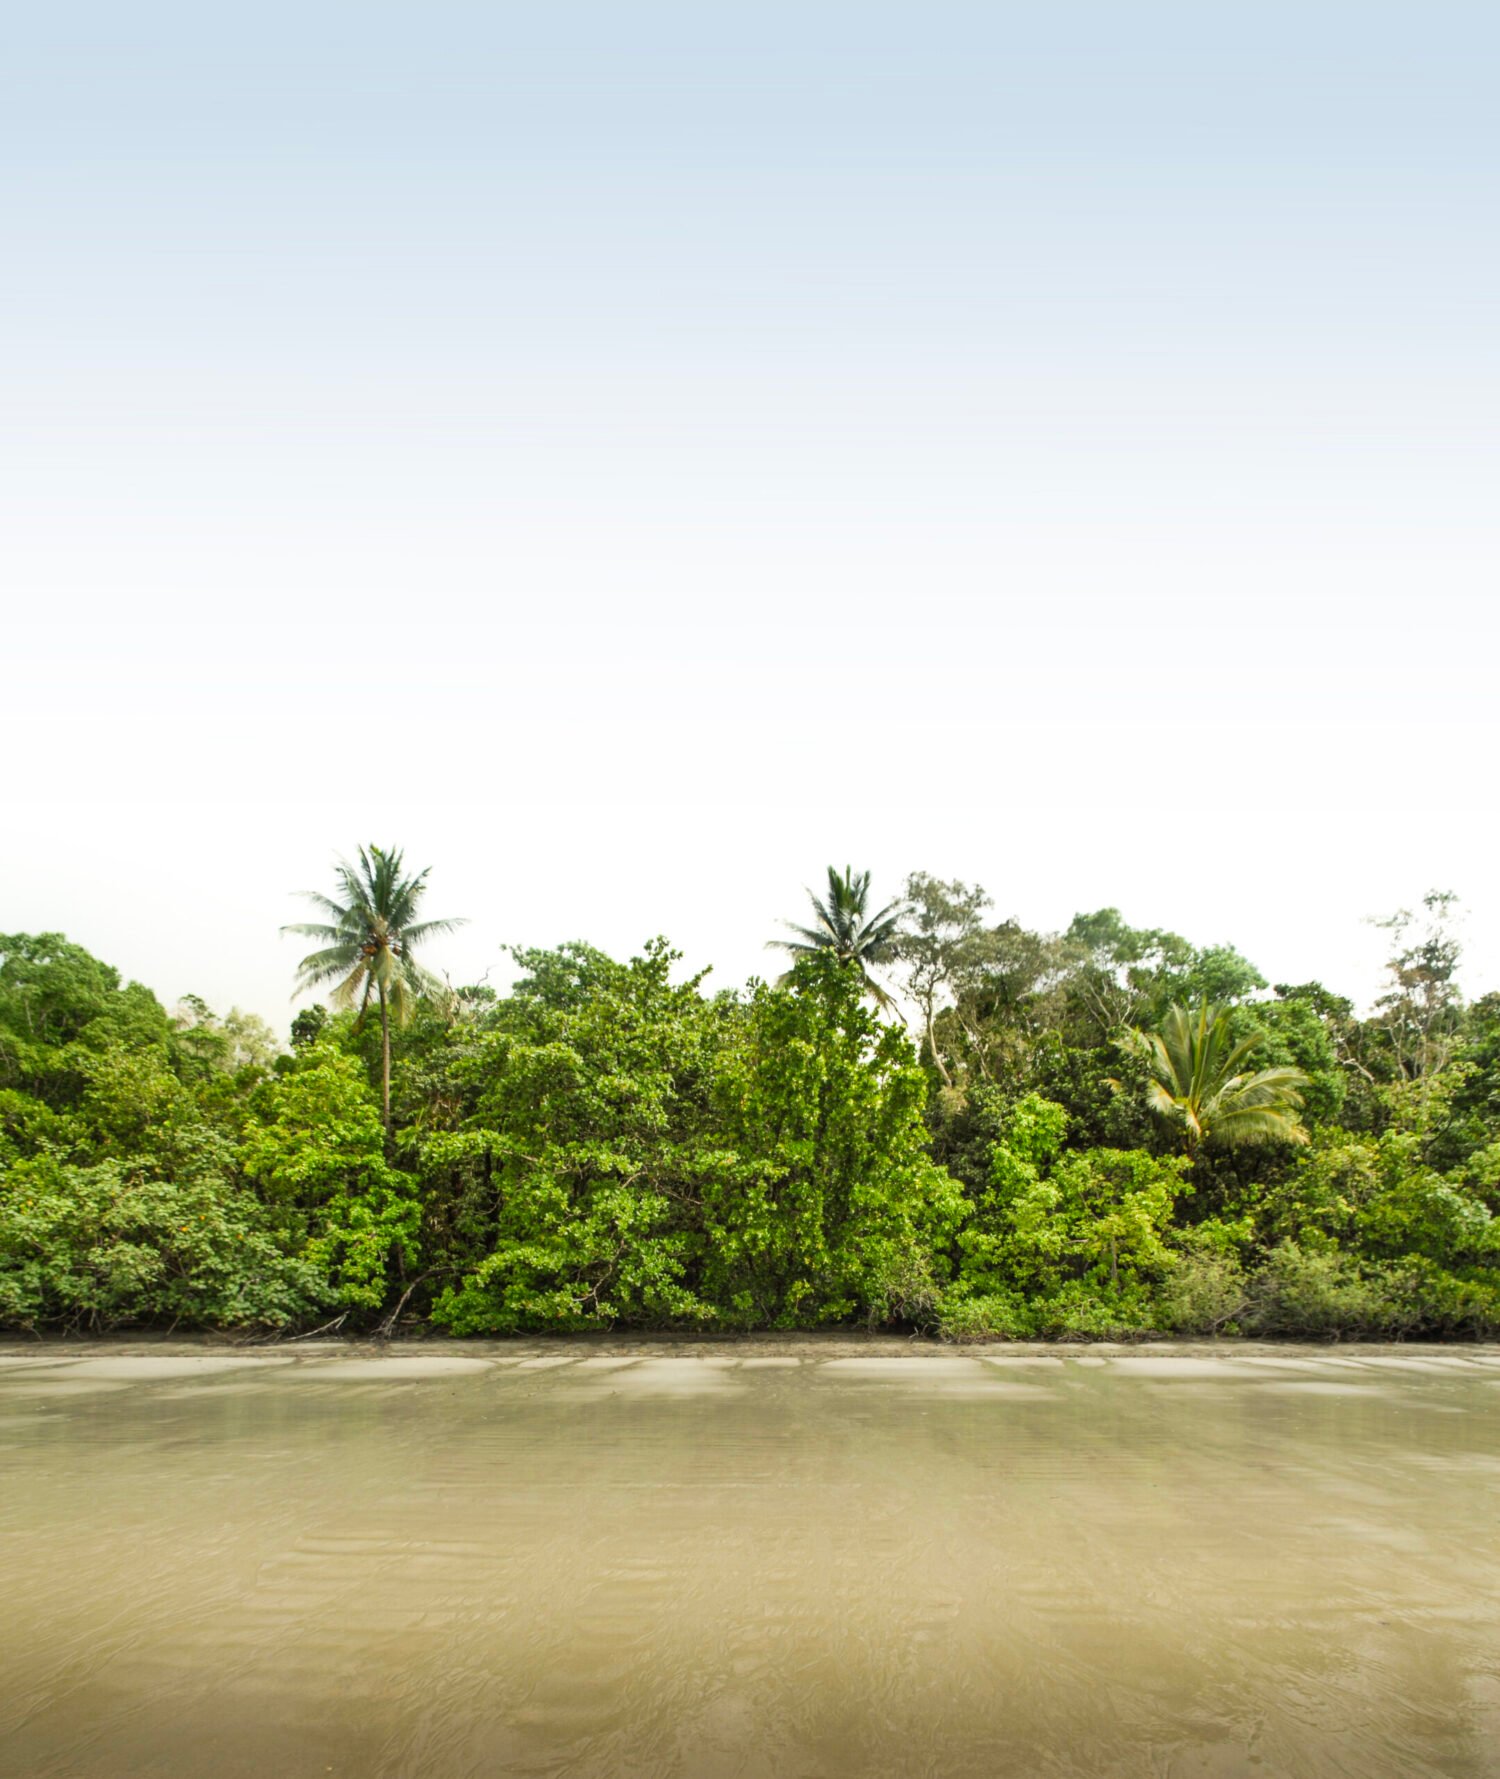 Lush tropical beach with dense green foliage under a blue sky.